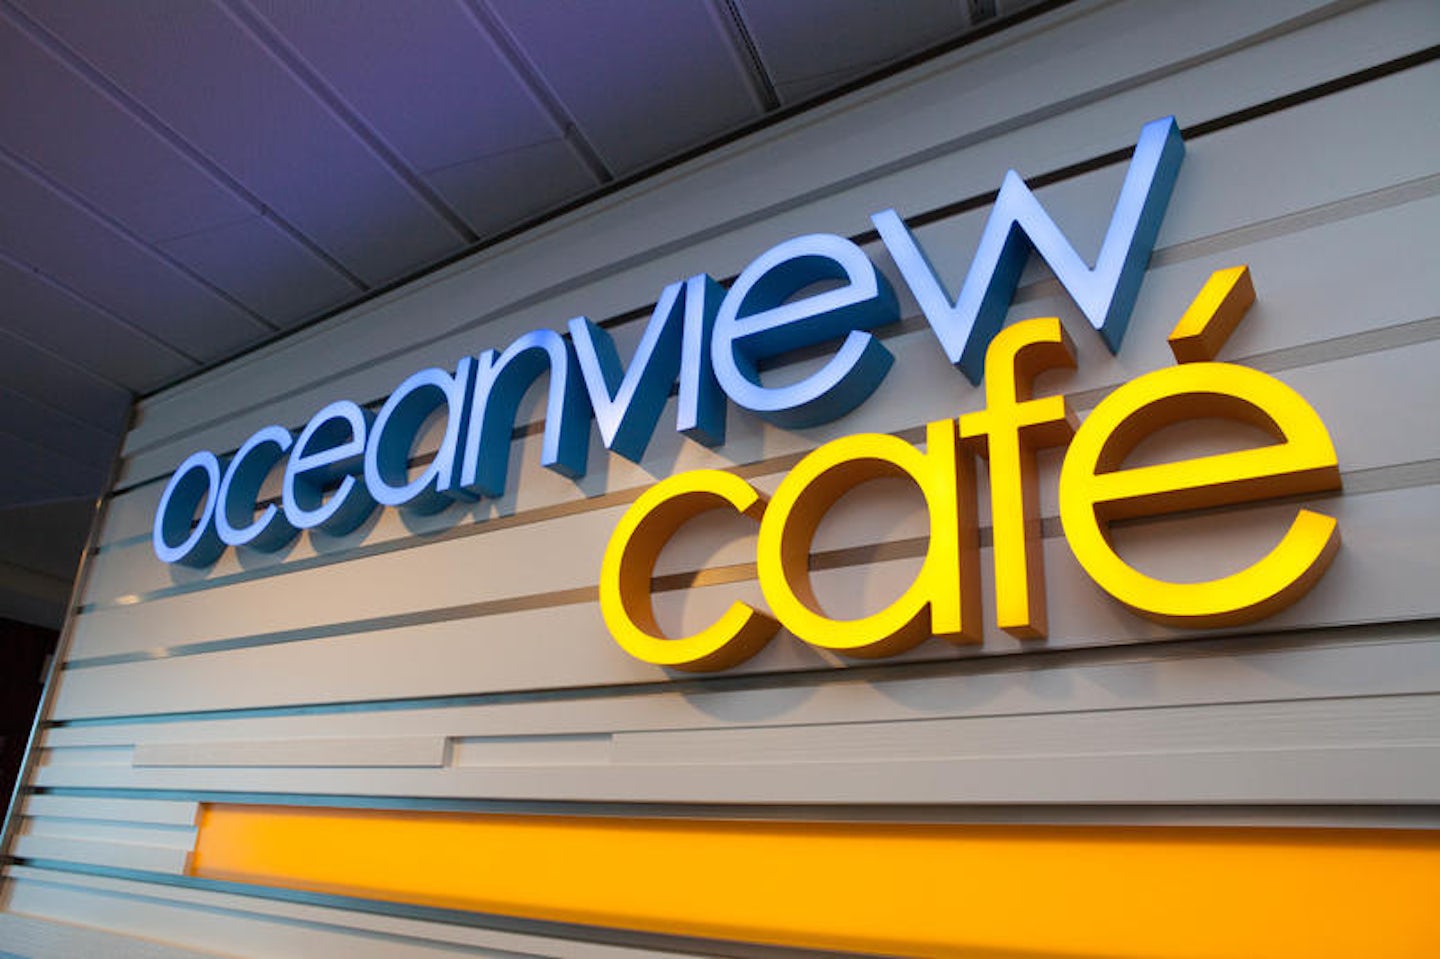 Oceanview Cafe on Celebrity Eclipse